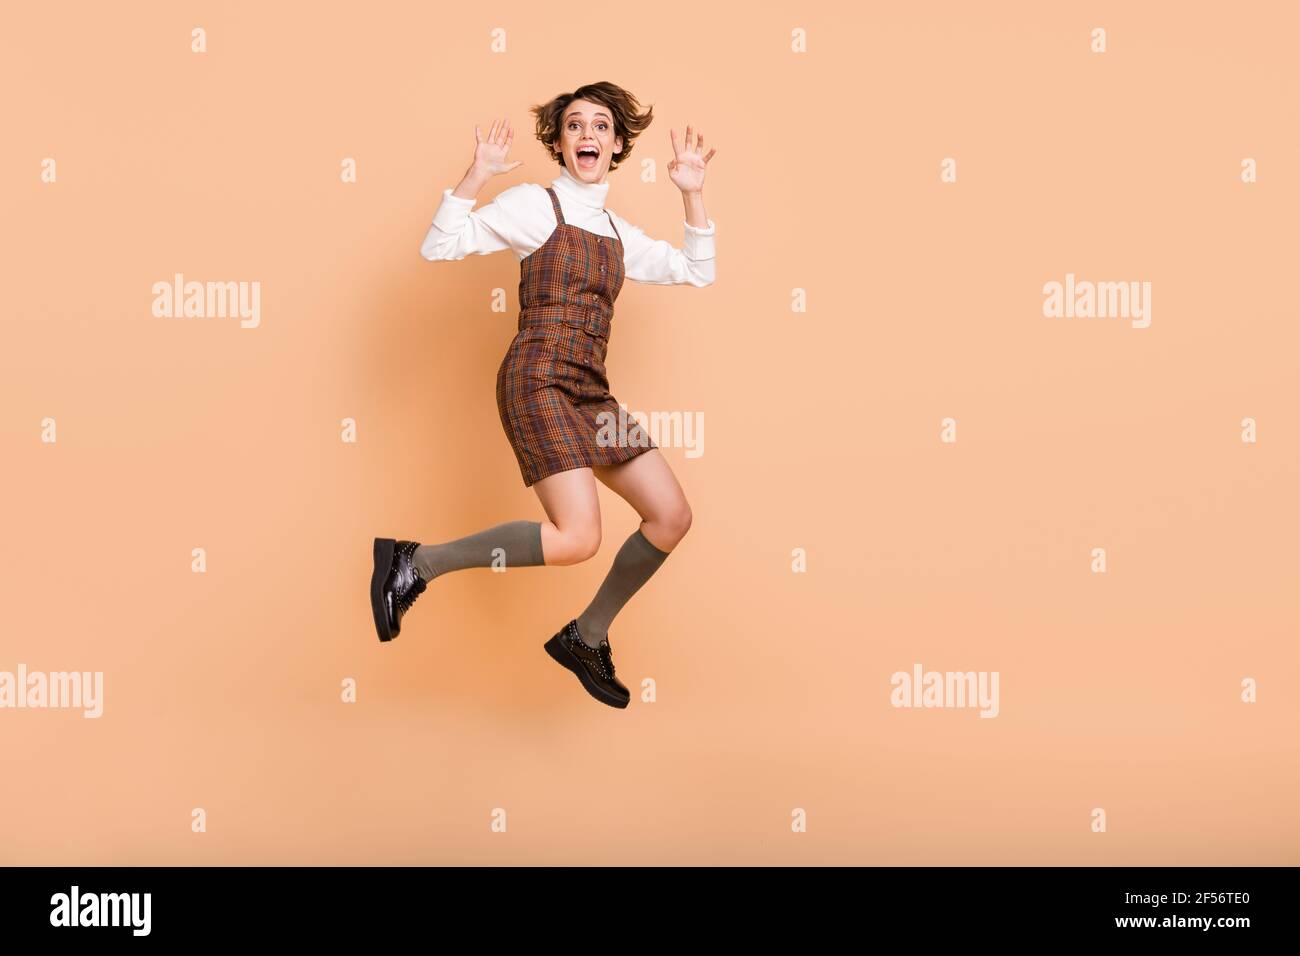 Full size profile photo of optimistic short hairdo girl jump run show cat wear dress socks shoes isolated on peach background Stock Photo